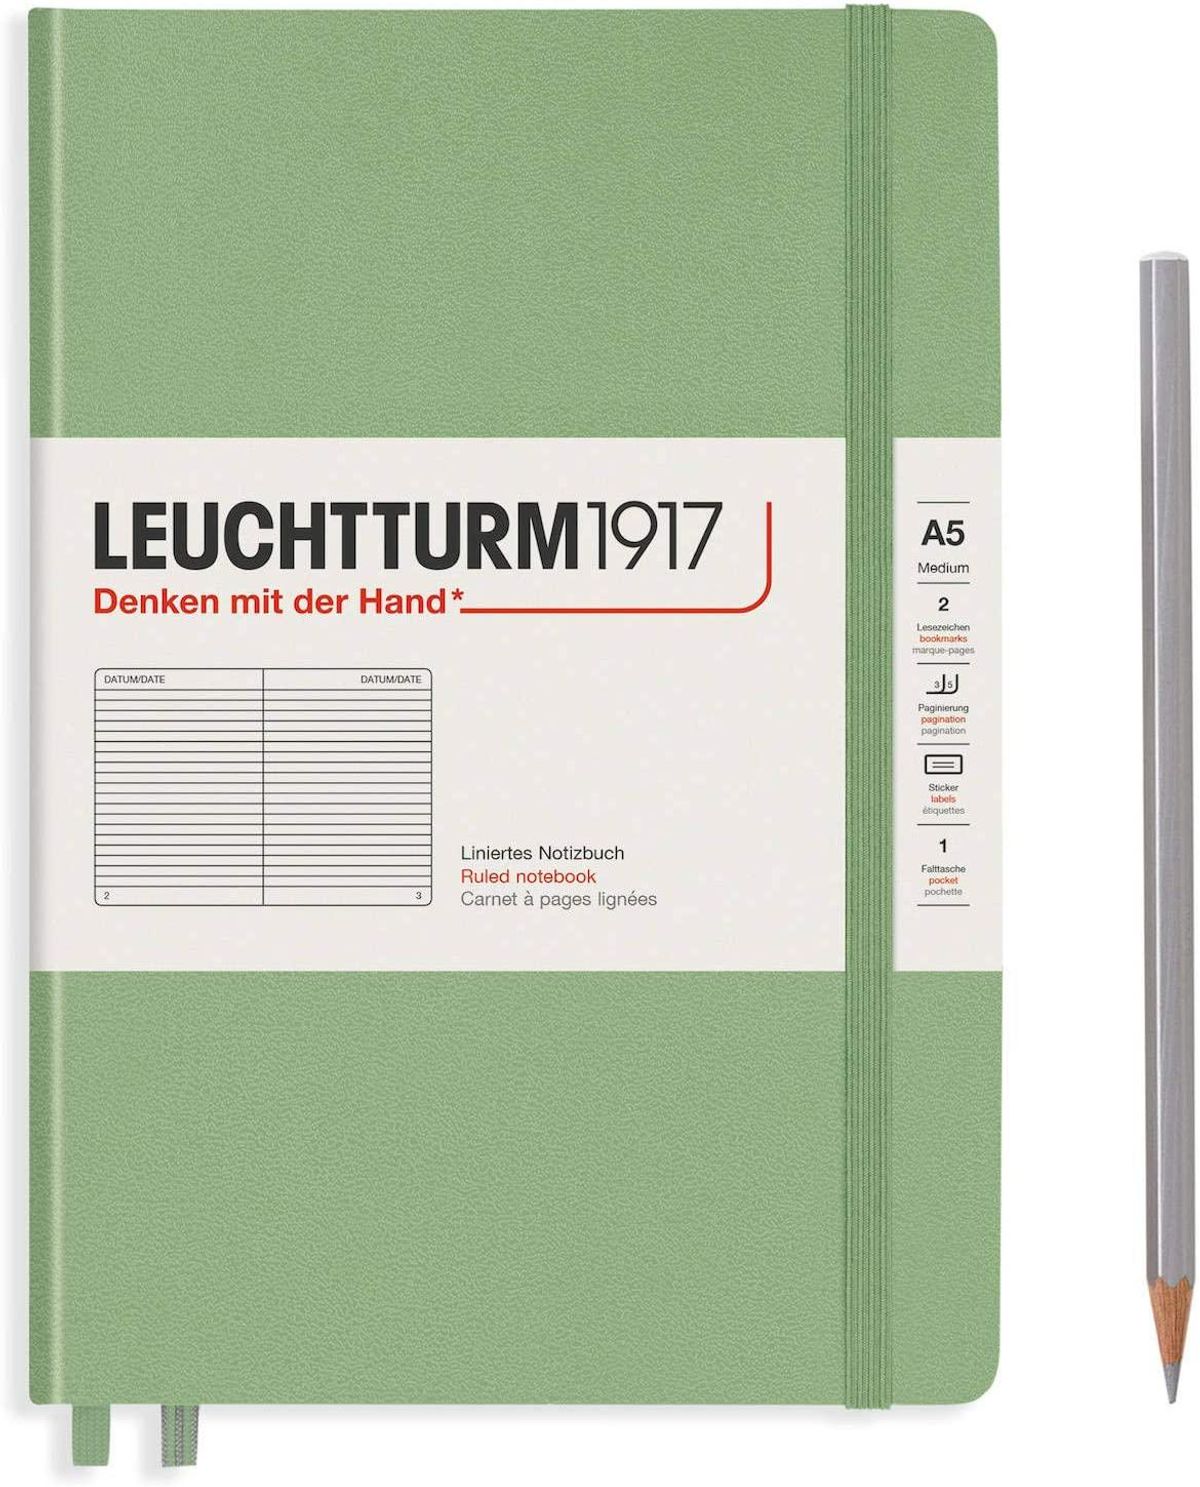 Medium A5 Ruled Hardcover Notebook